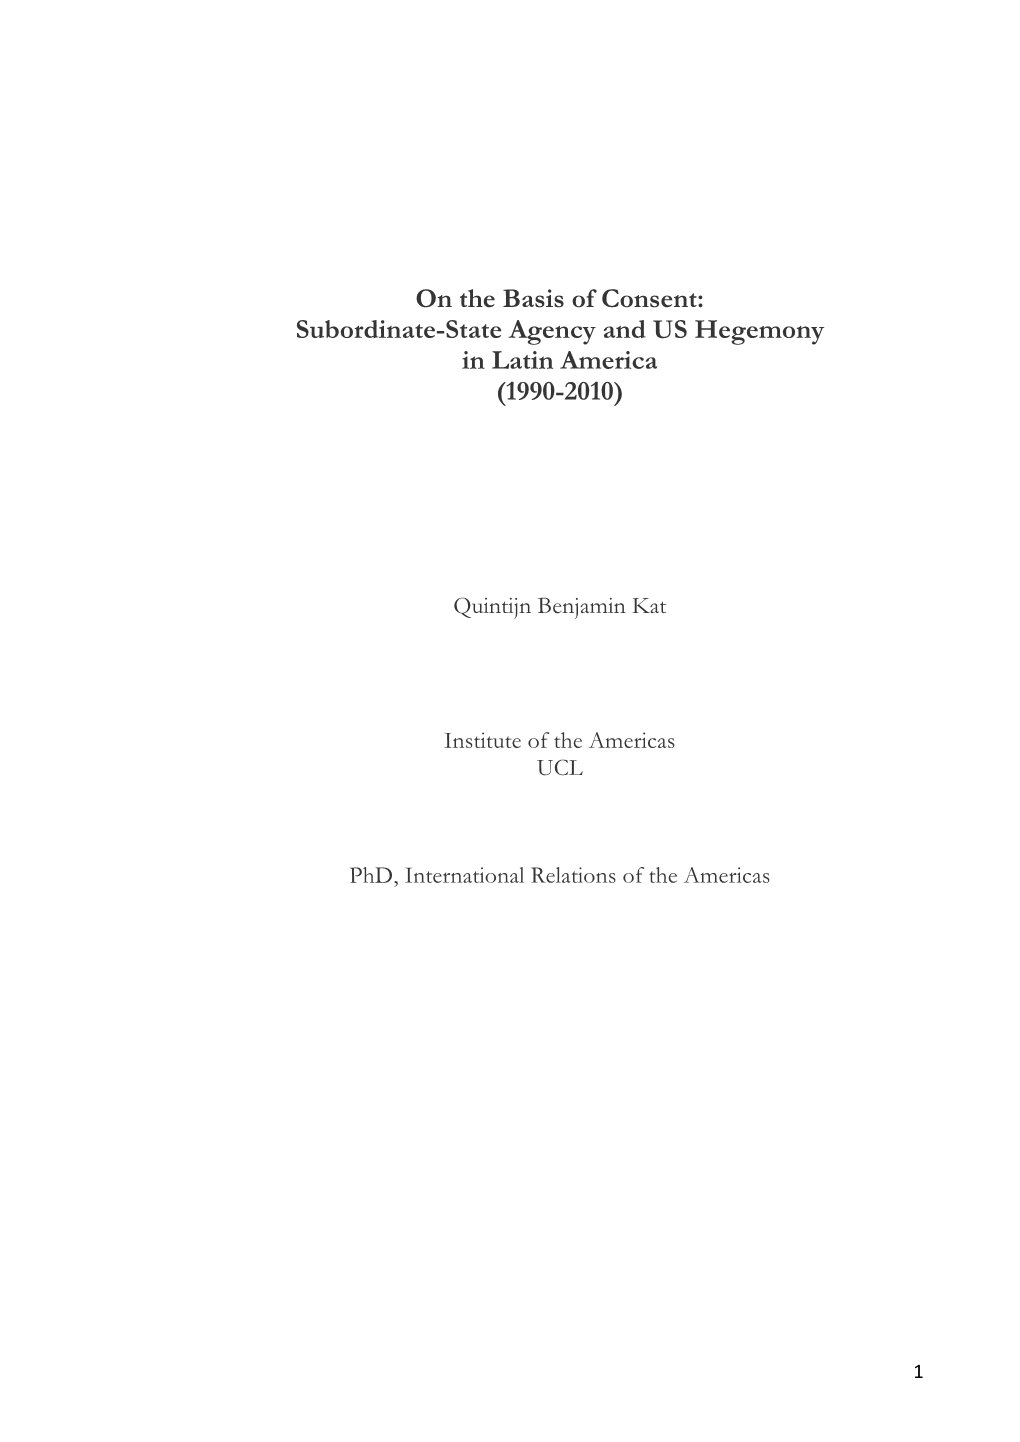 Subordinate-State Agency and US Hegemony in Latin America (1990-2010)